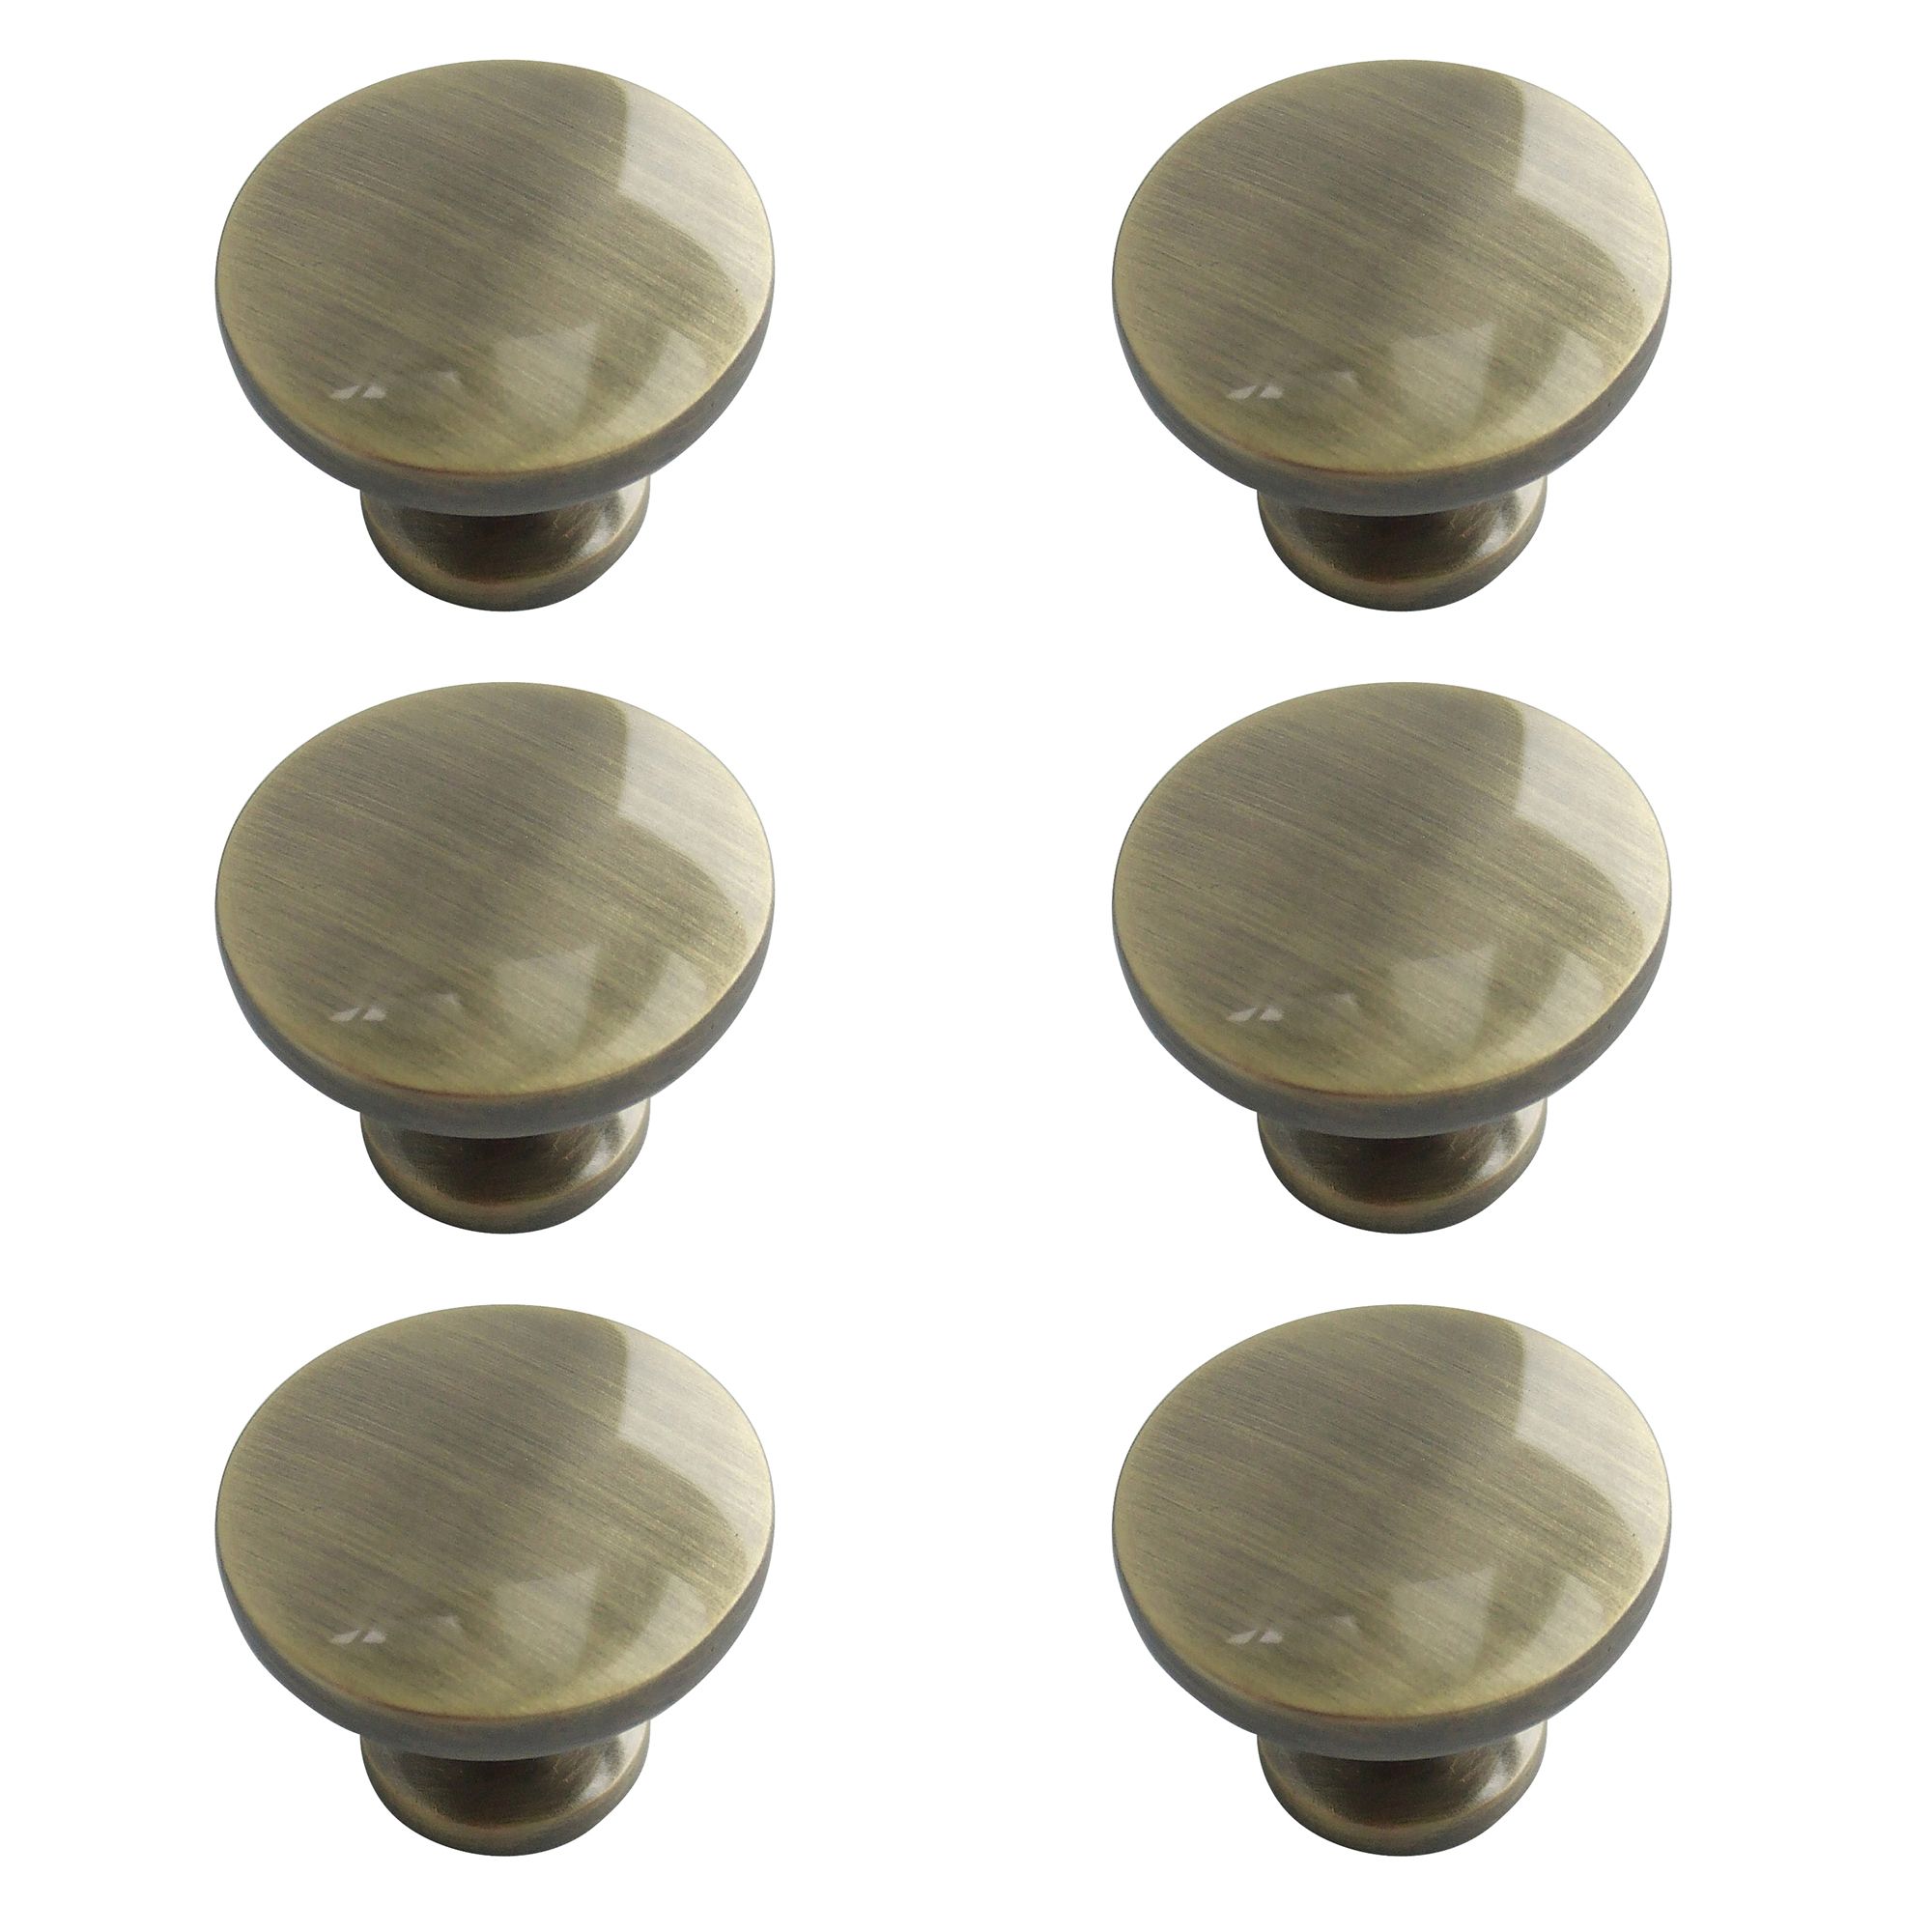 Zinc alloy Antique brass effect Round Furniture Knob (Dia)30mm, Pack of 6